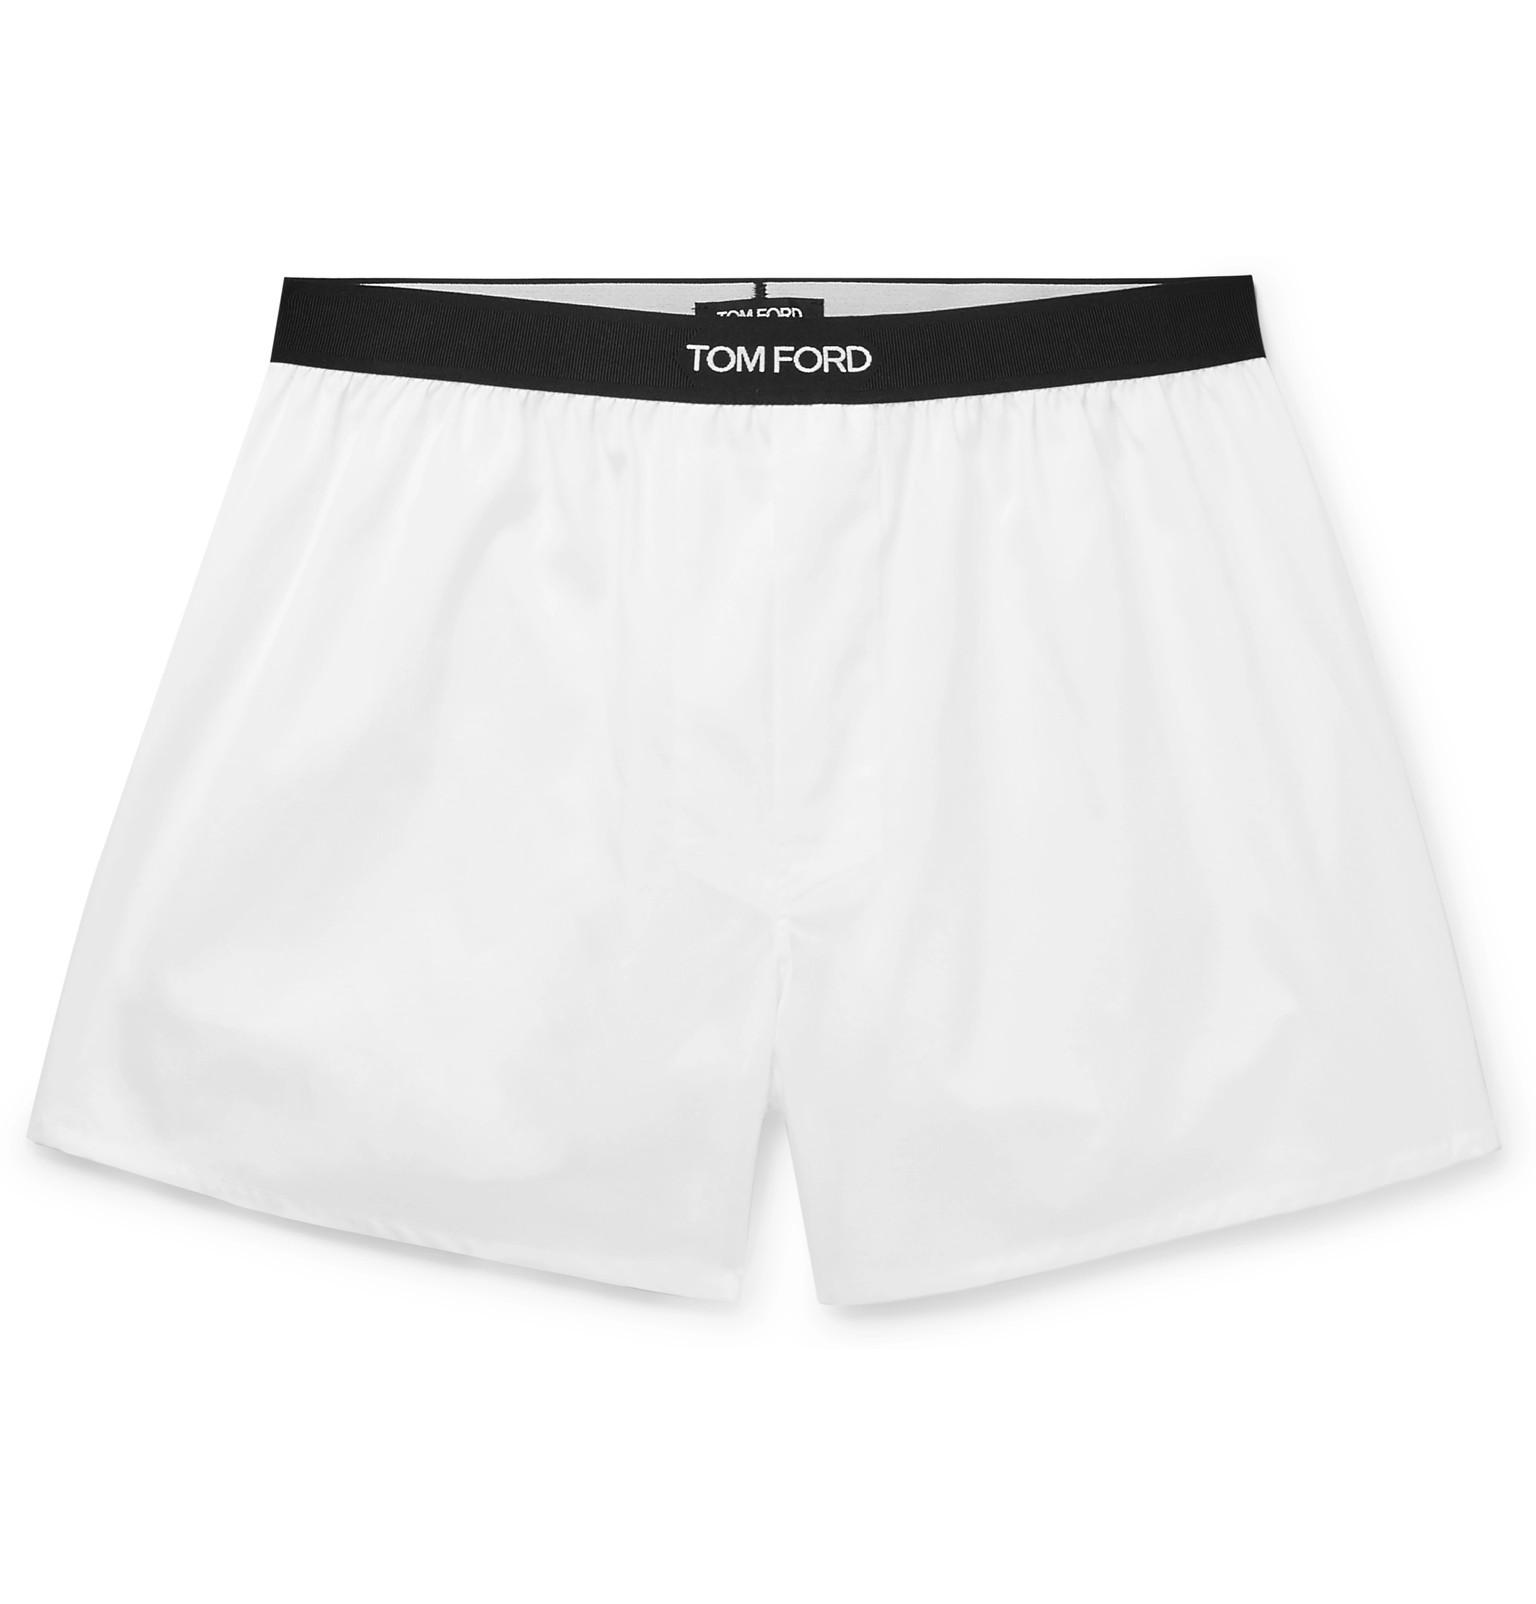 Tom Ford Grosgrain-trimmed Cotton Boxer Shorts in White for Men - Lyst